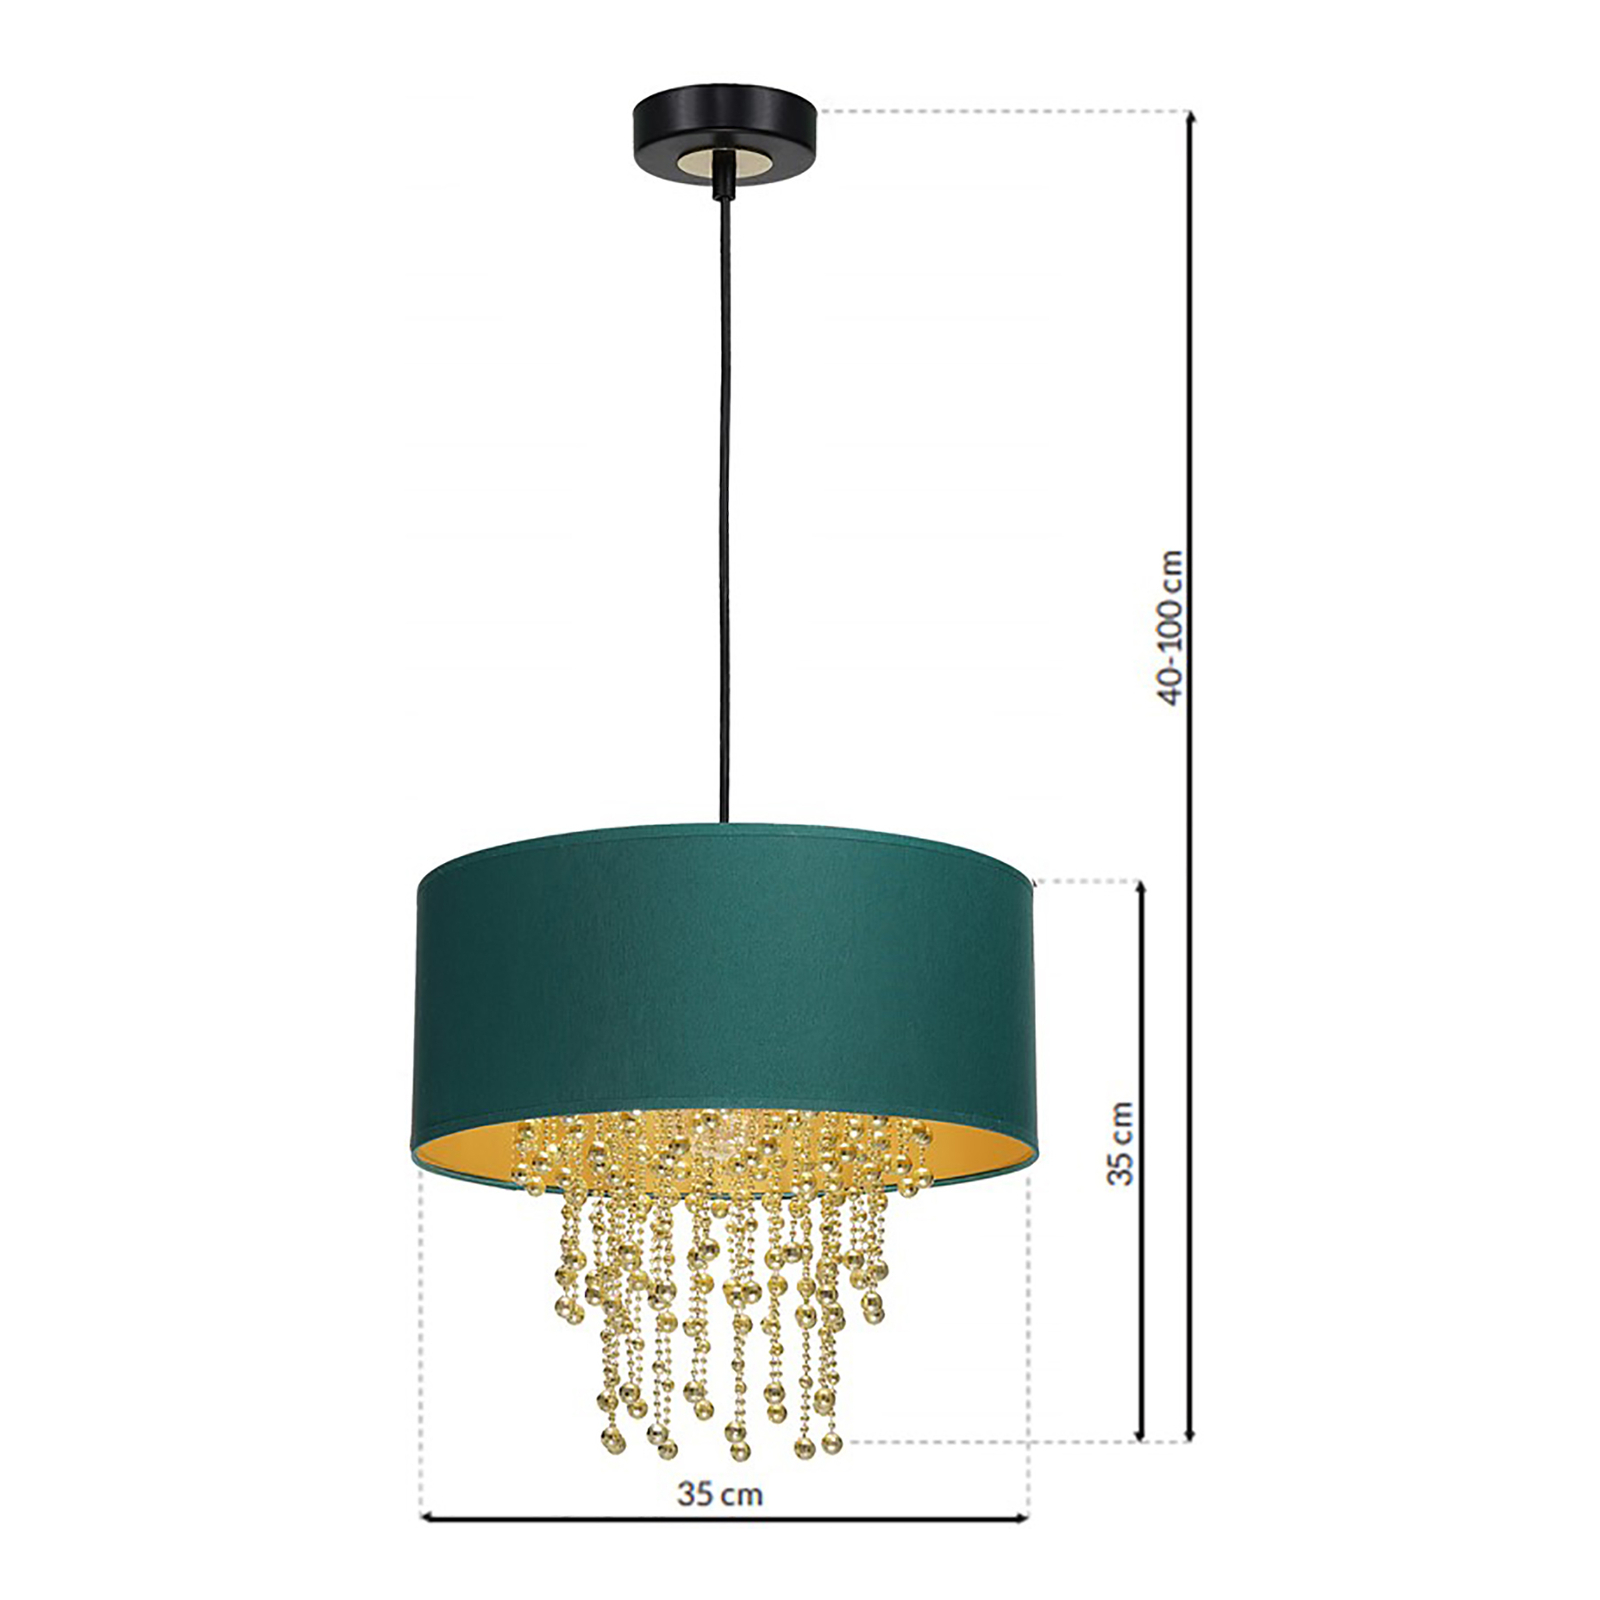 Hanglamp Almeria, groen/goud